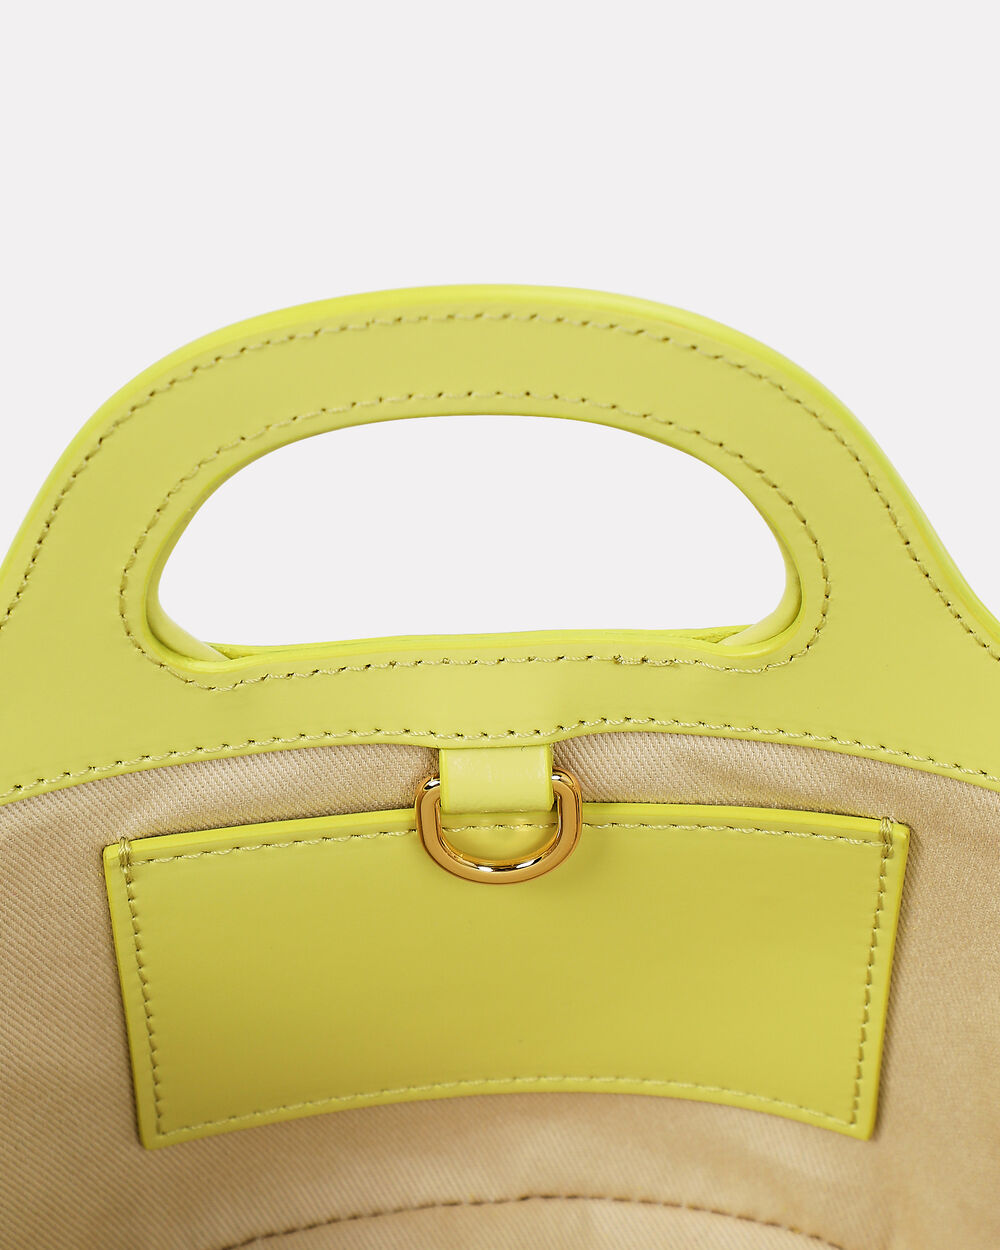 Tropicalia Micro Bag in yellow raffia-effect fabric and leather